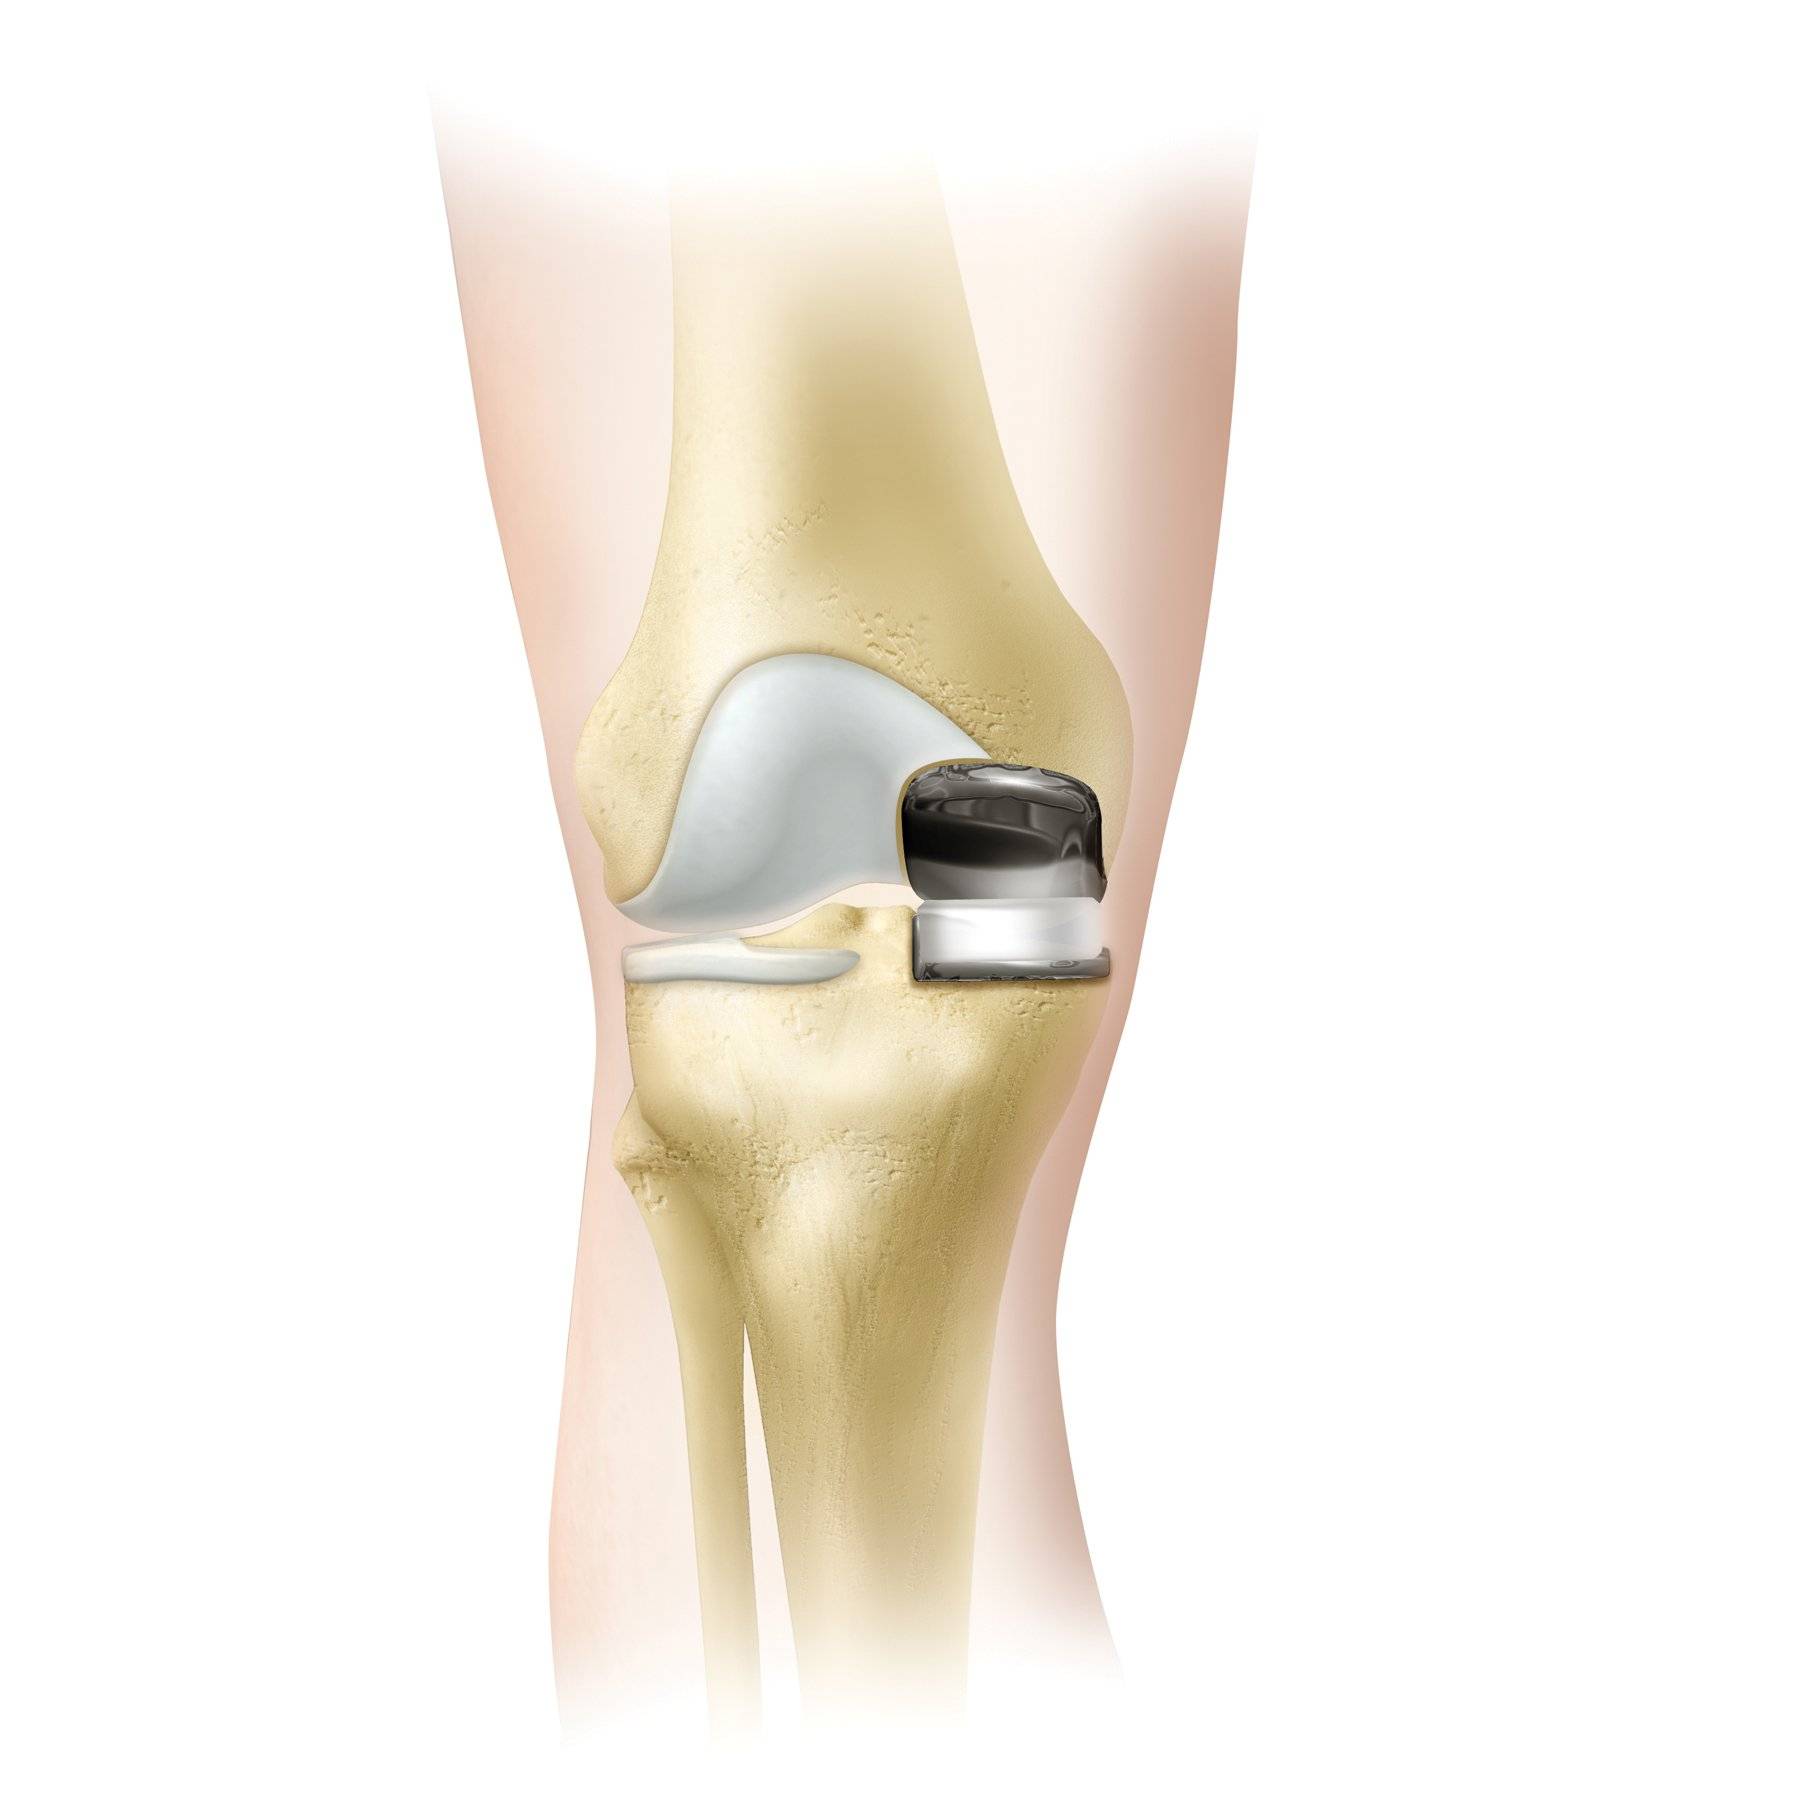 Операция по замене коленного сустава москва. Коленный эндопротез Зиммер. Эндопротез коленного сустава. Эндопротез Зиммер коленного сустава. Артропластика коленного сустава.